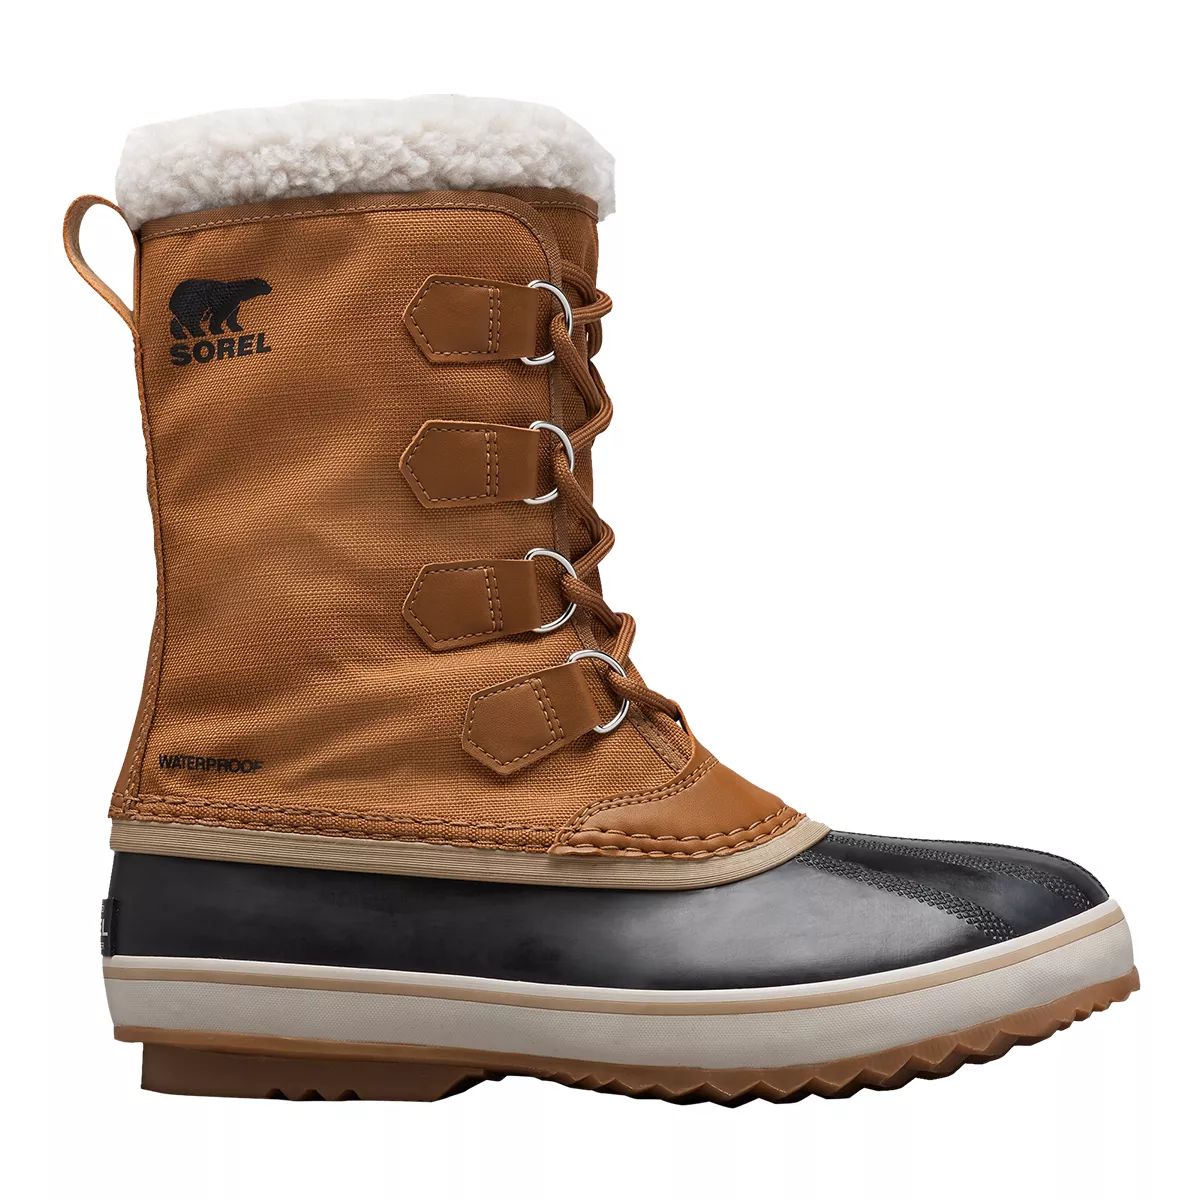 Sorel Men's Pac Nylon Winter Boots  Waterproof Insulated